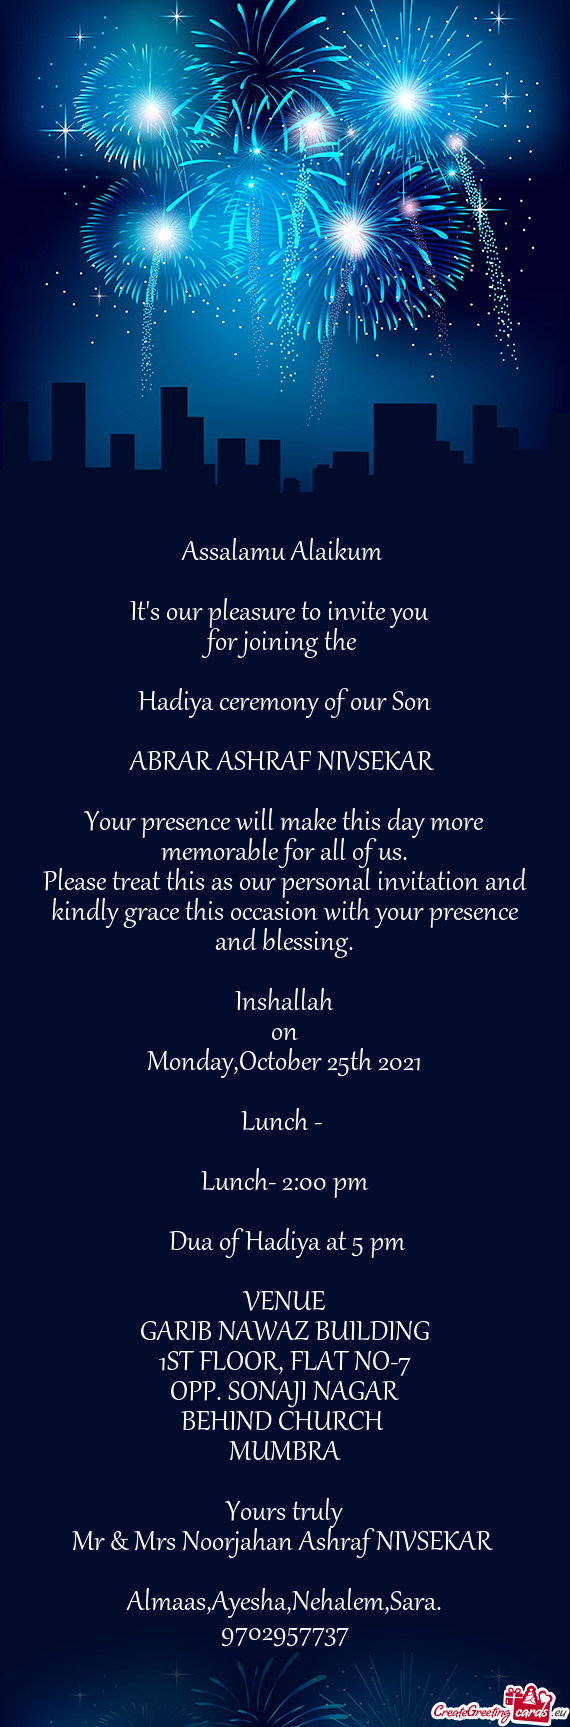 Hadiya ceremony of our Son